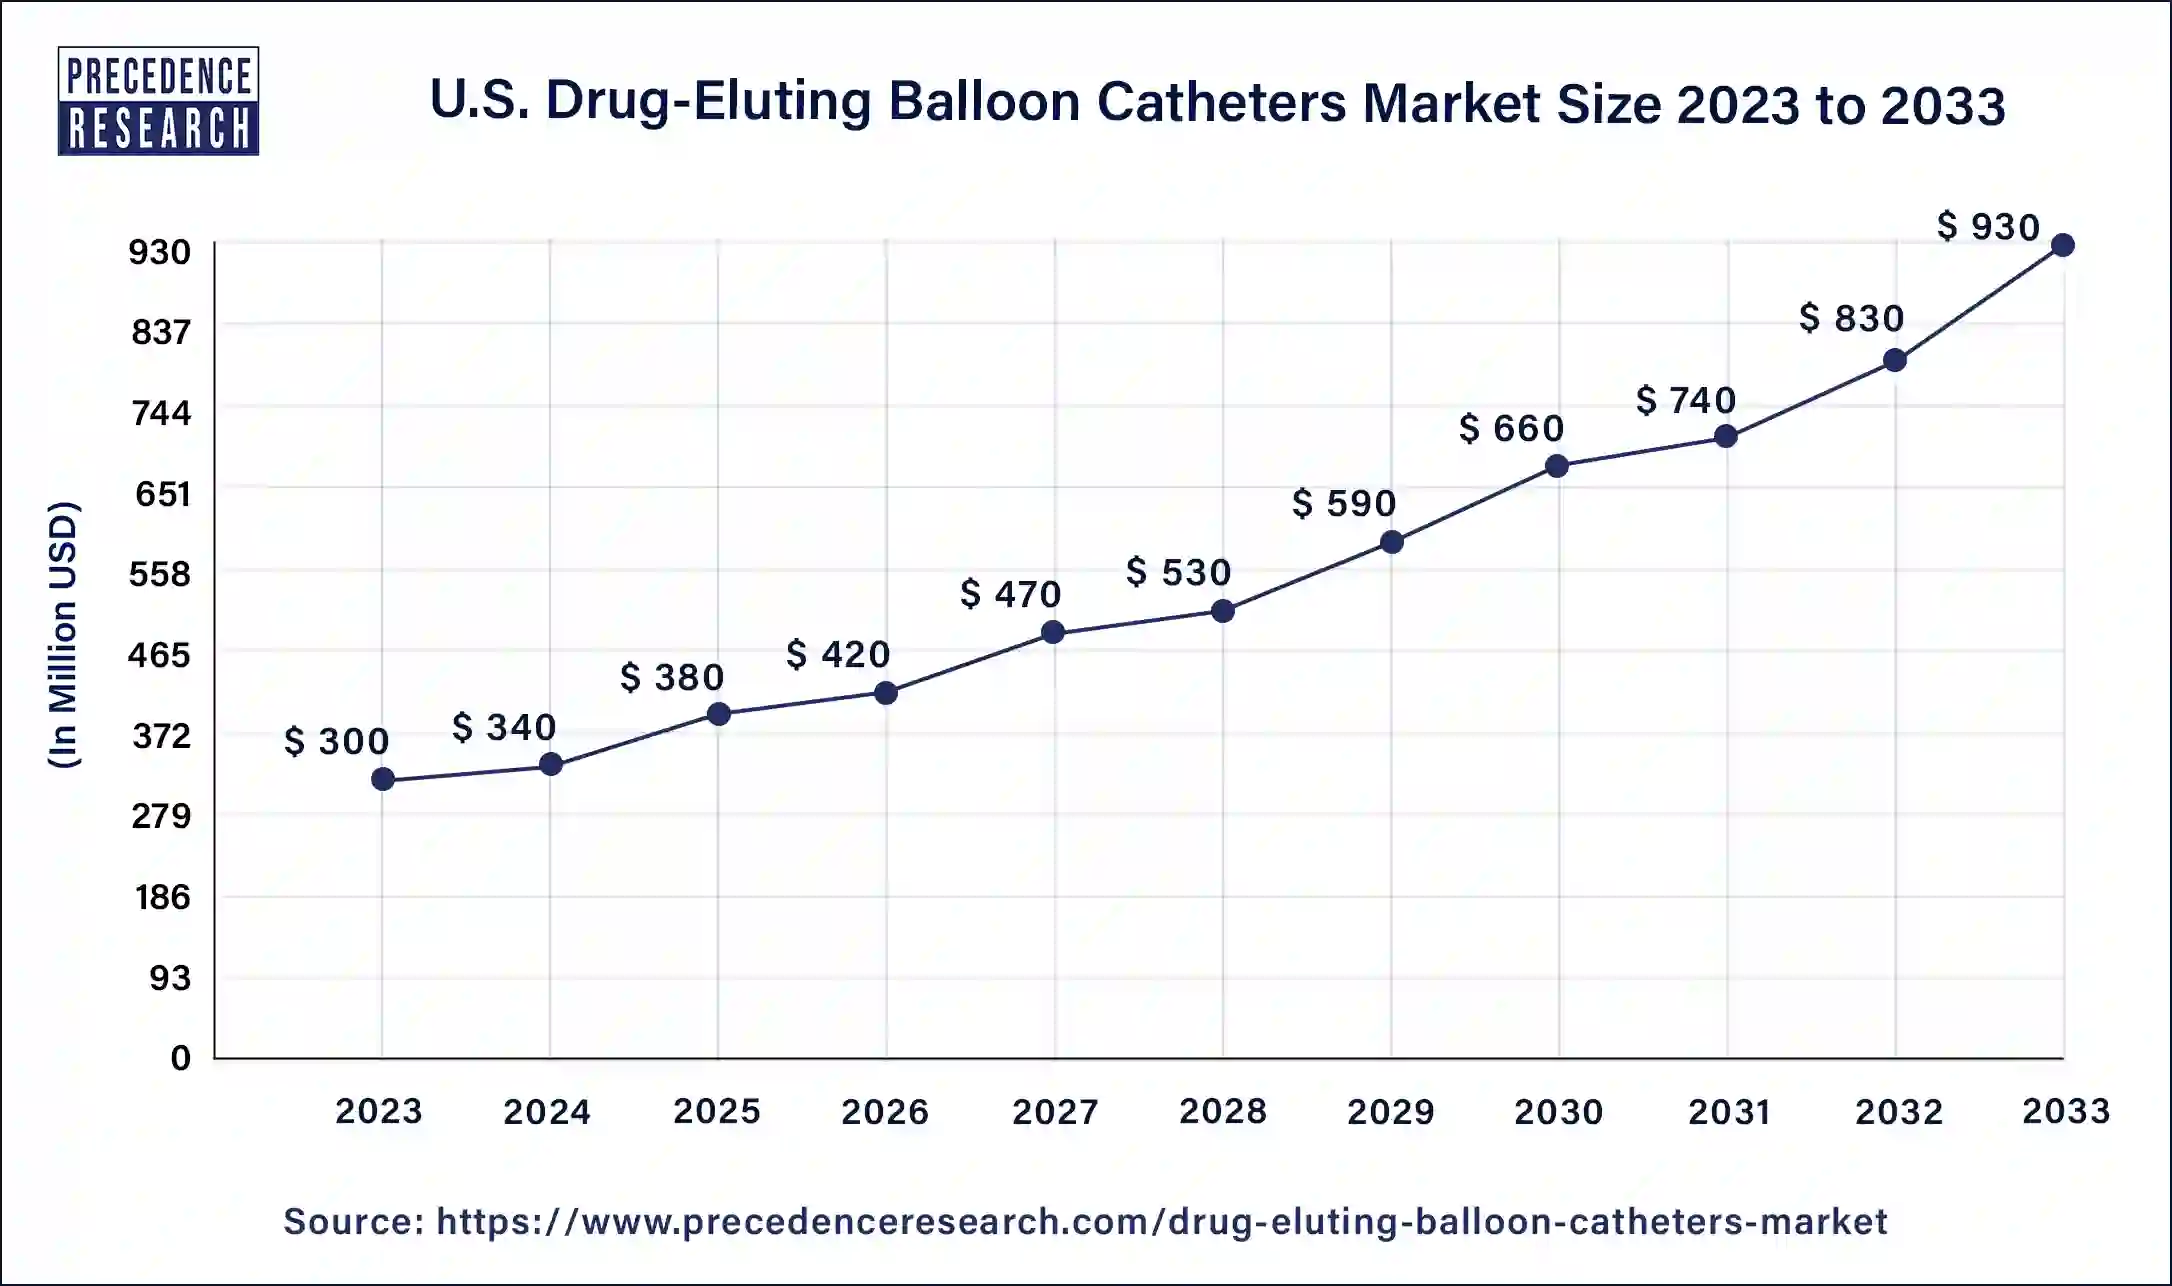 U.S. Drug-Eluting Balloon Catheters Market Size 2024 to 2033